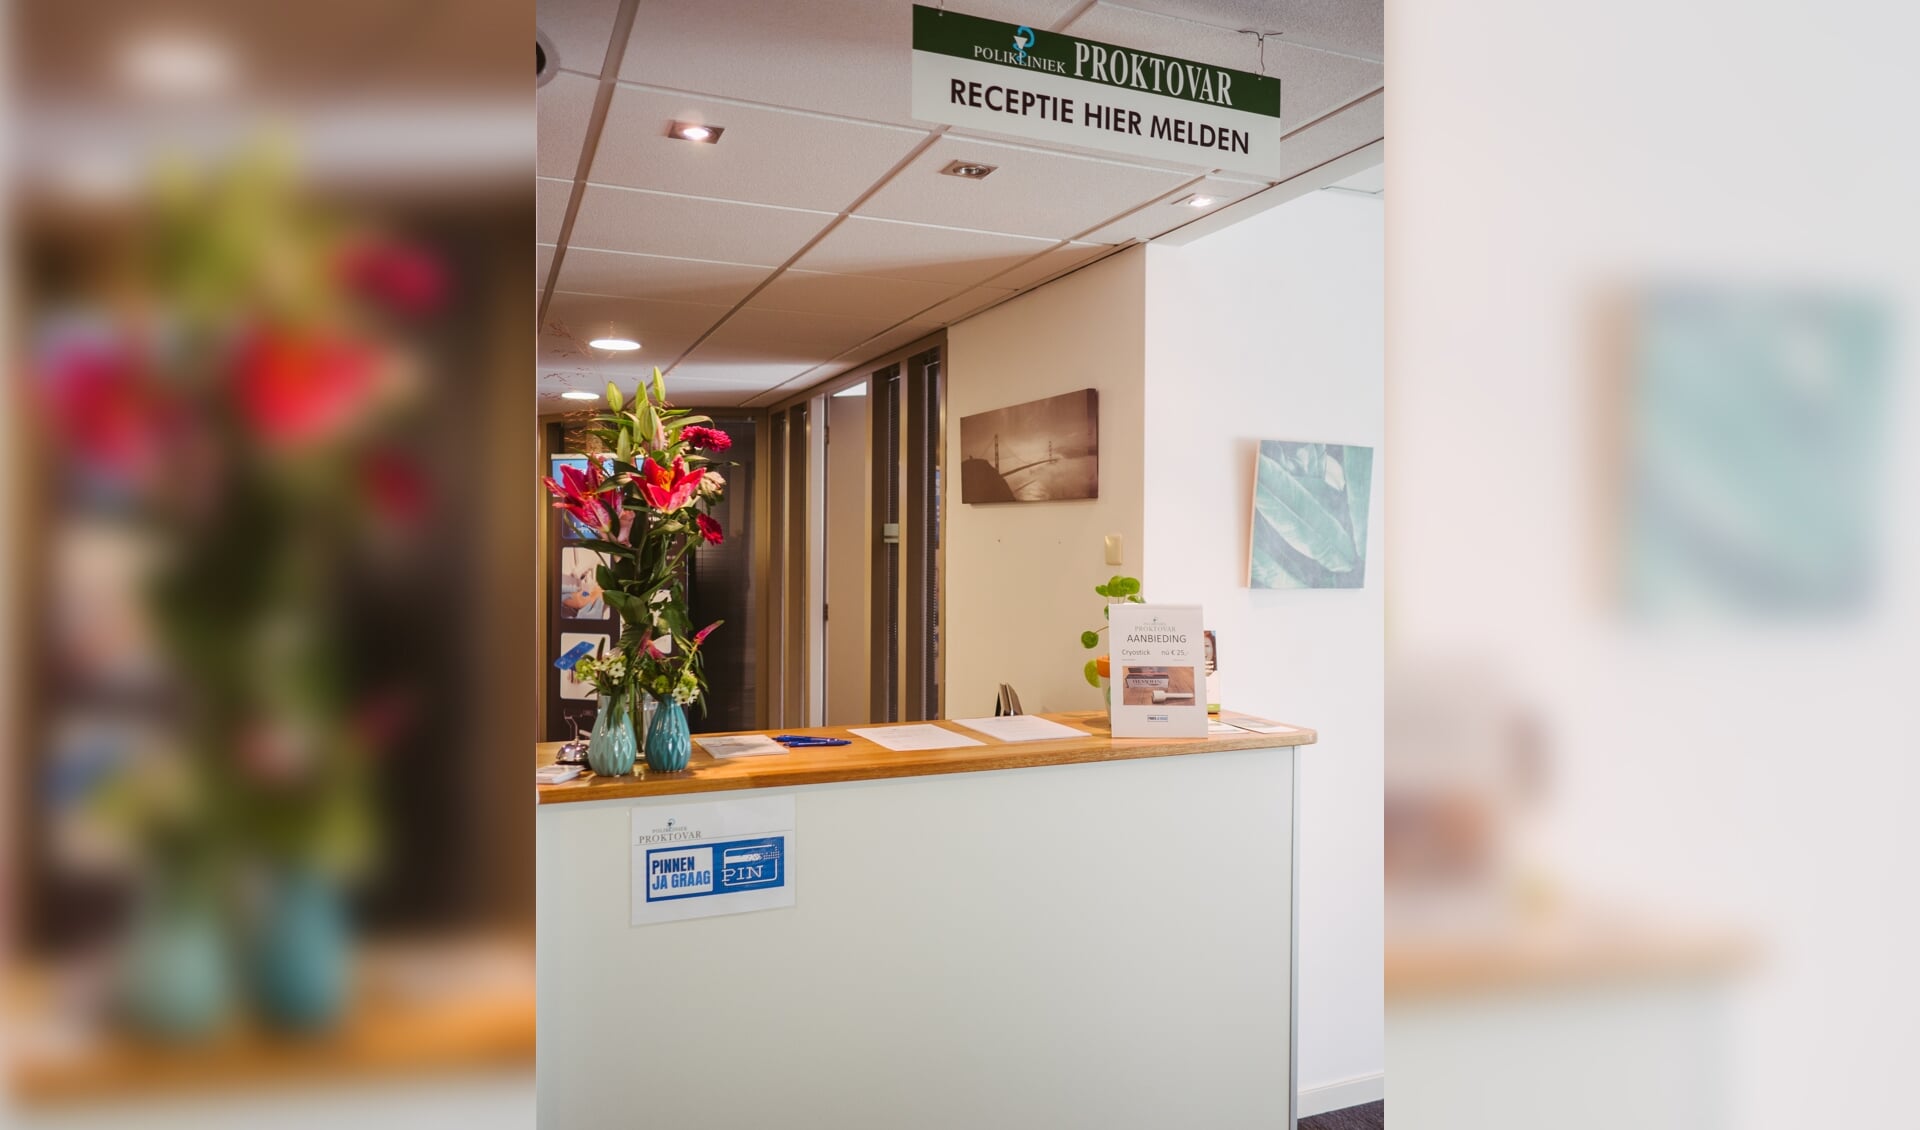 Polikliniek Proktovar biedt hoogwaardige zorg in een aangename omgeving in de Hengelose kliniek.